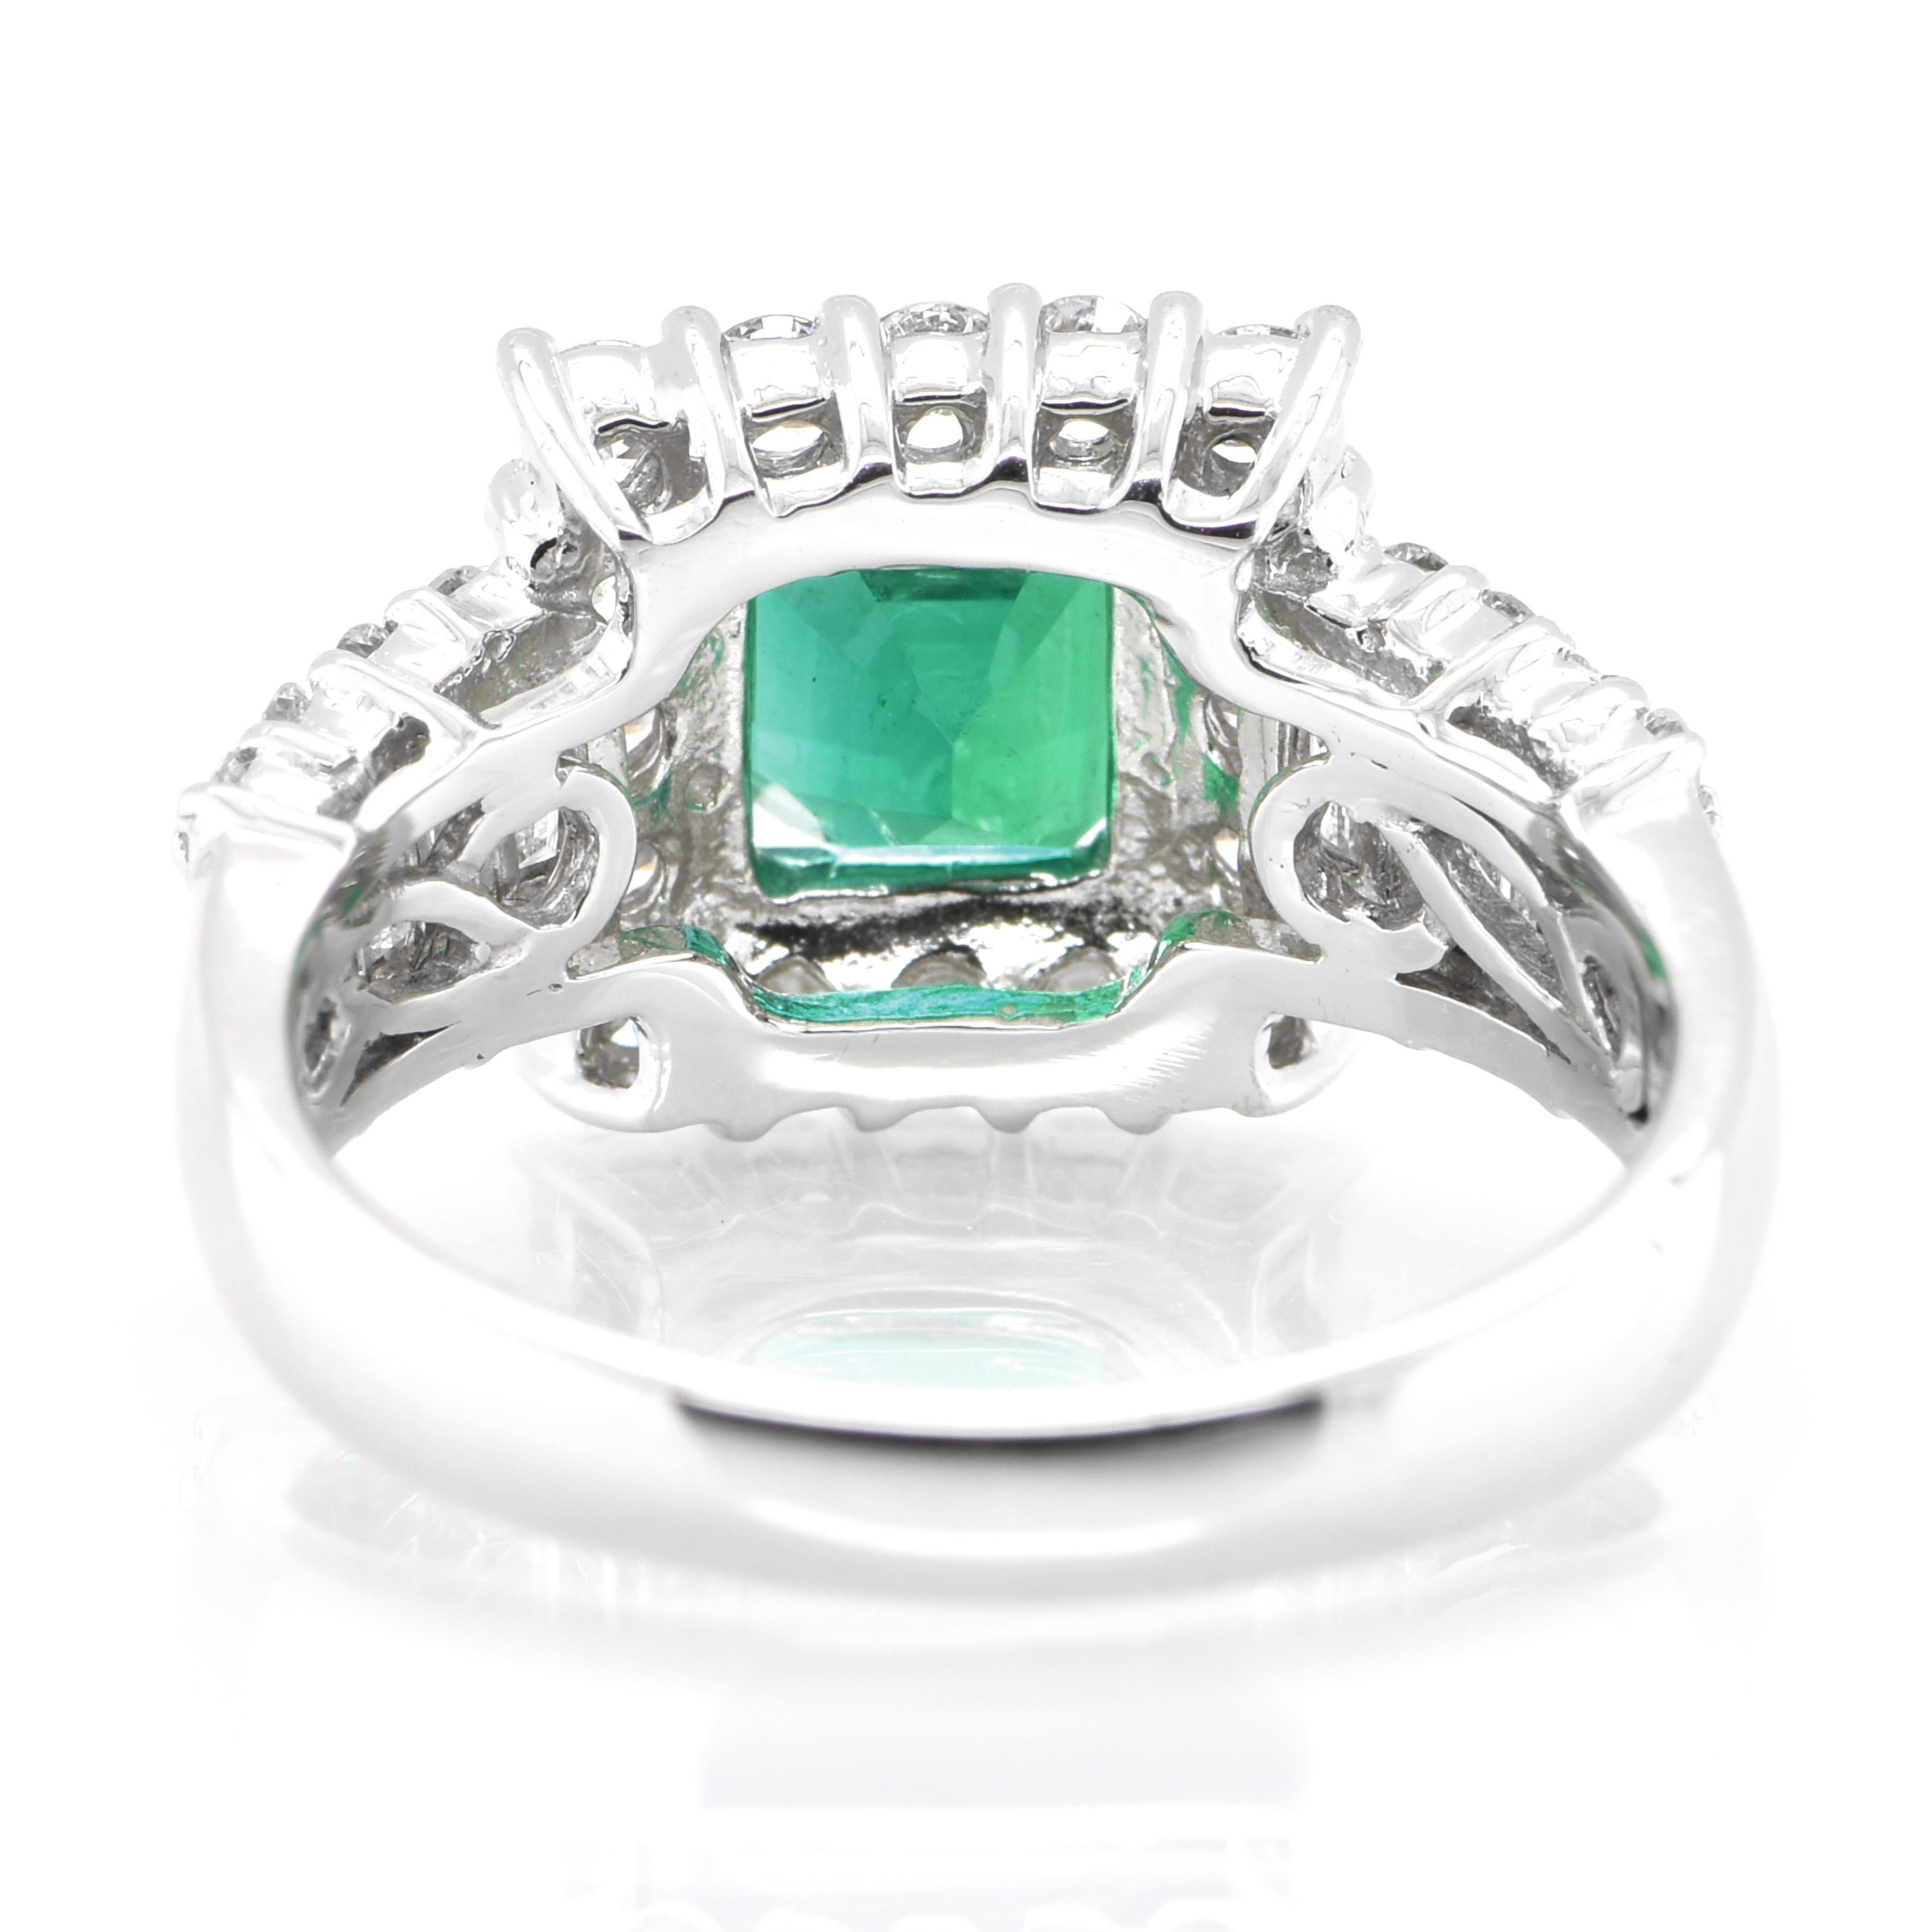 Modern GRS Certified 1.39 Carat Vivid Green Colombian Emerald Ring Set in Platinum